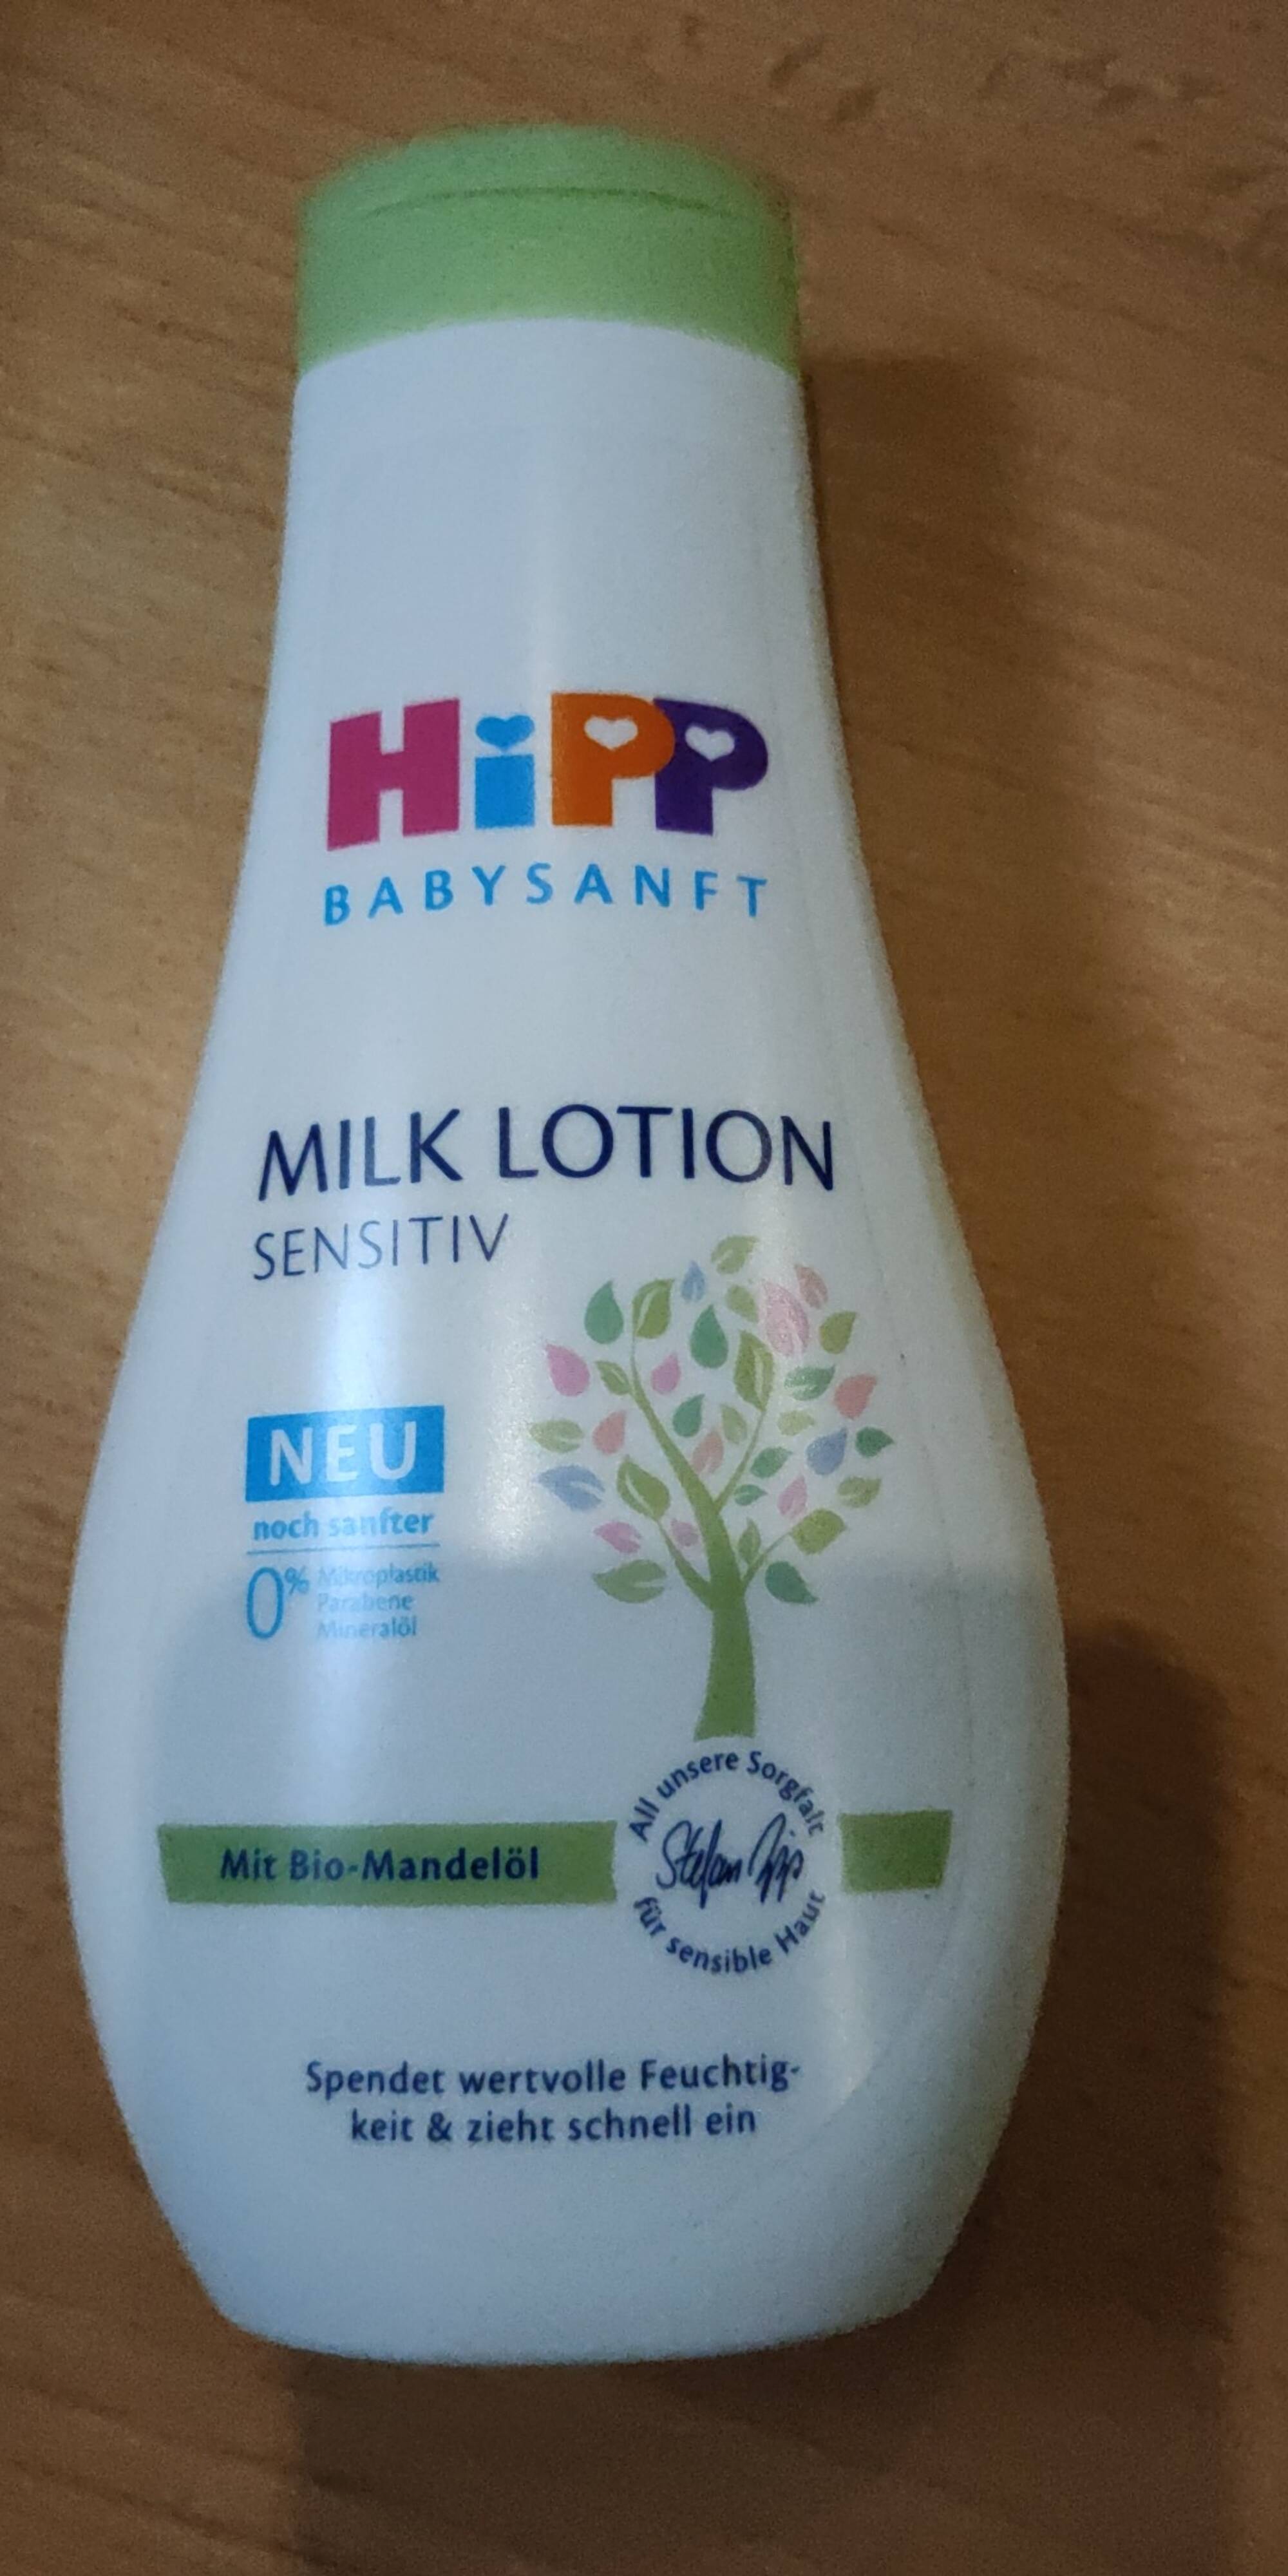 HIPP - Babysanft - Milk lotion sensitiv mit bio mandelöl